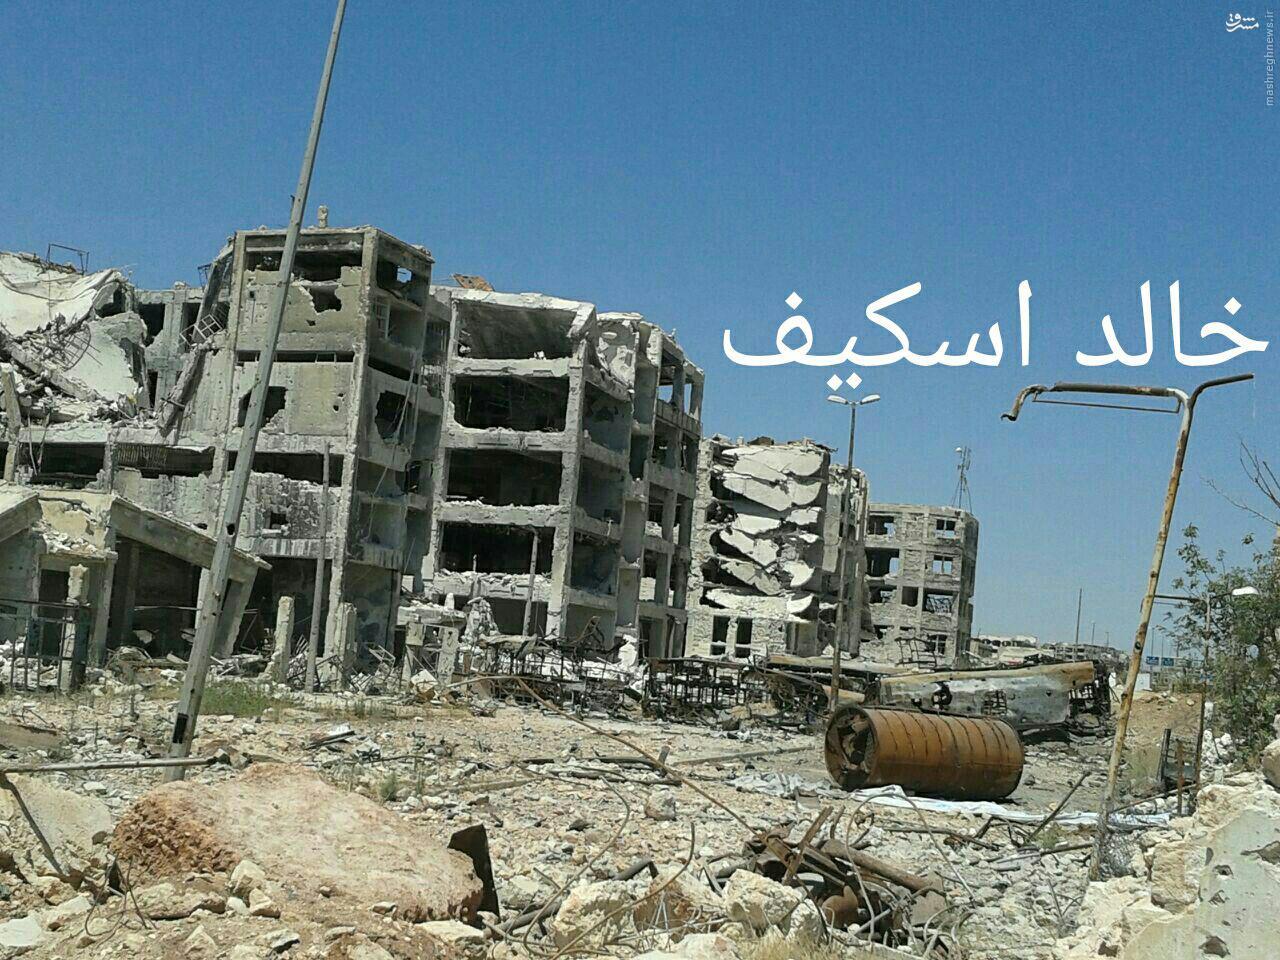 پیشروی ارتش سوریه در منطقه للیرمون+عکس